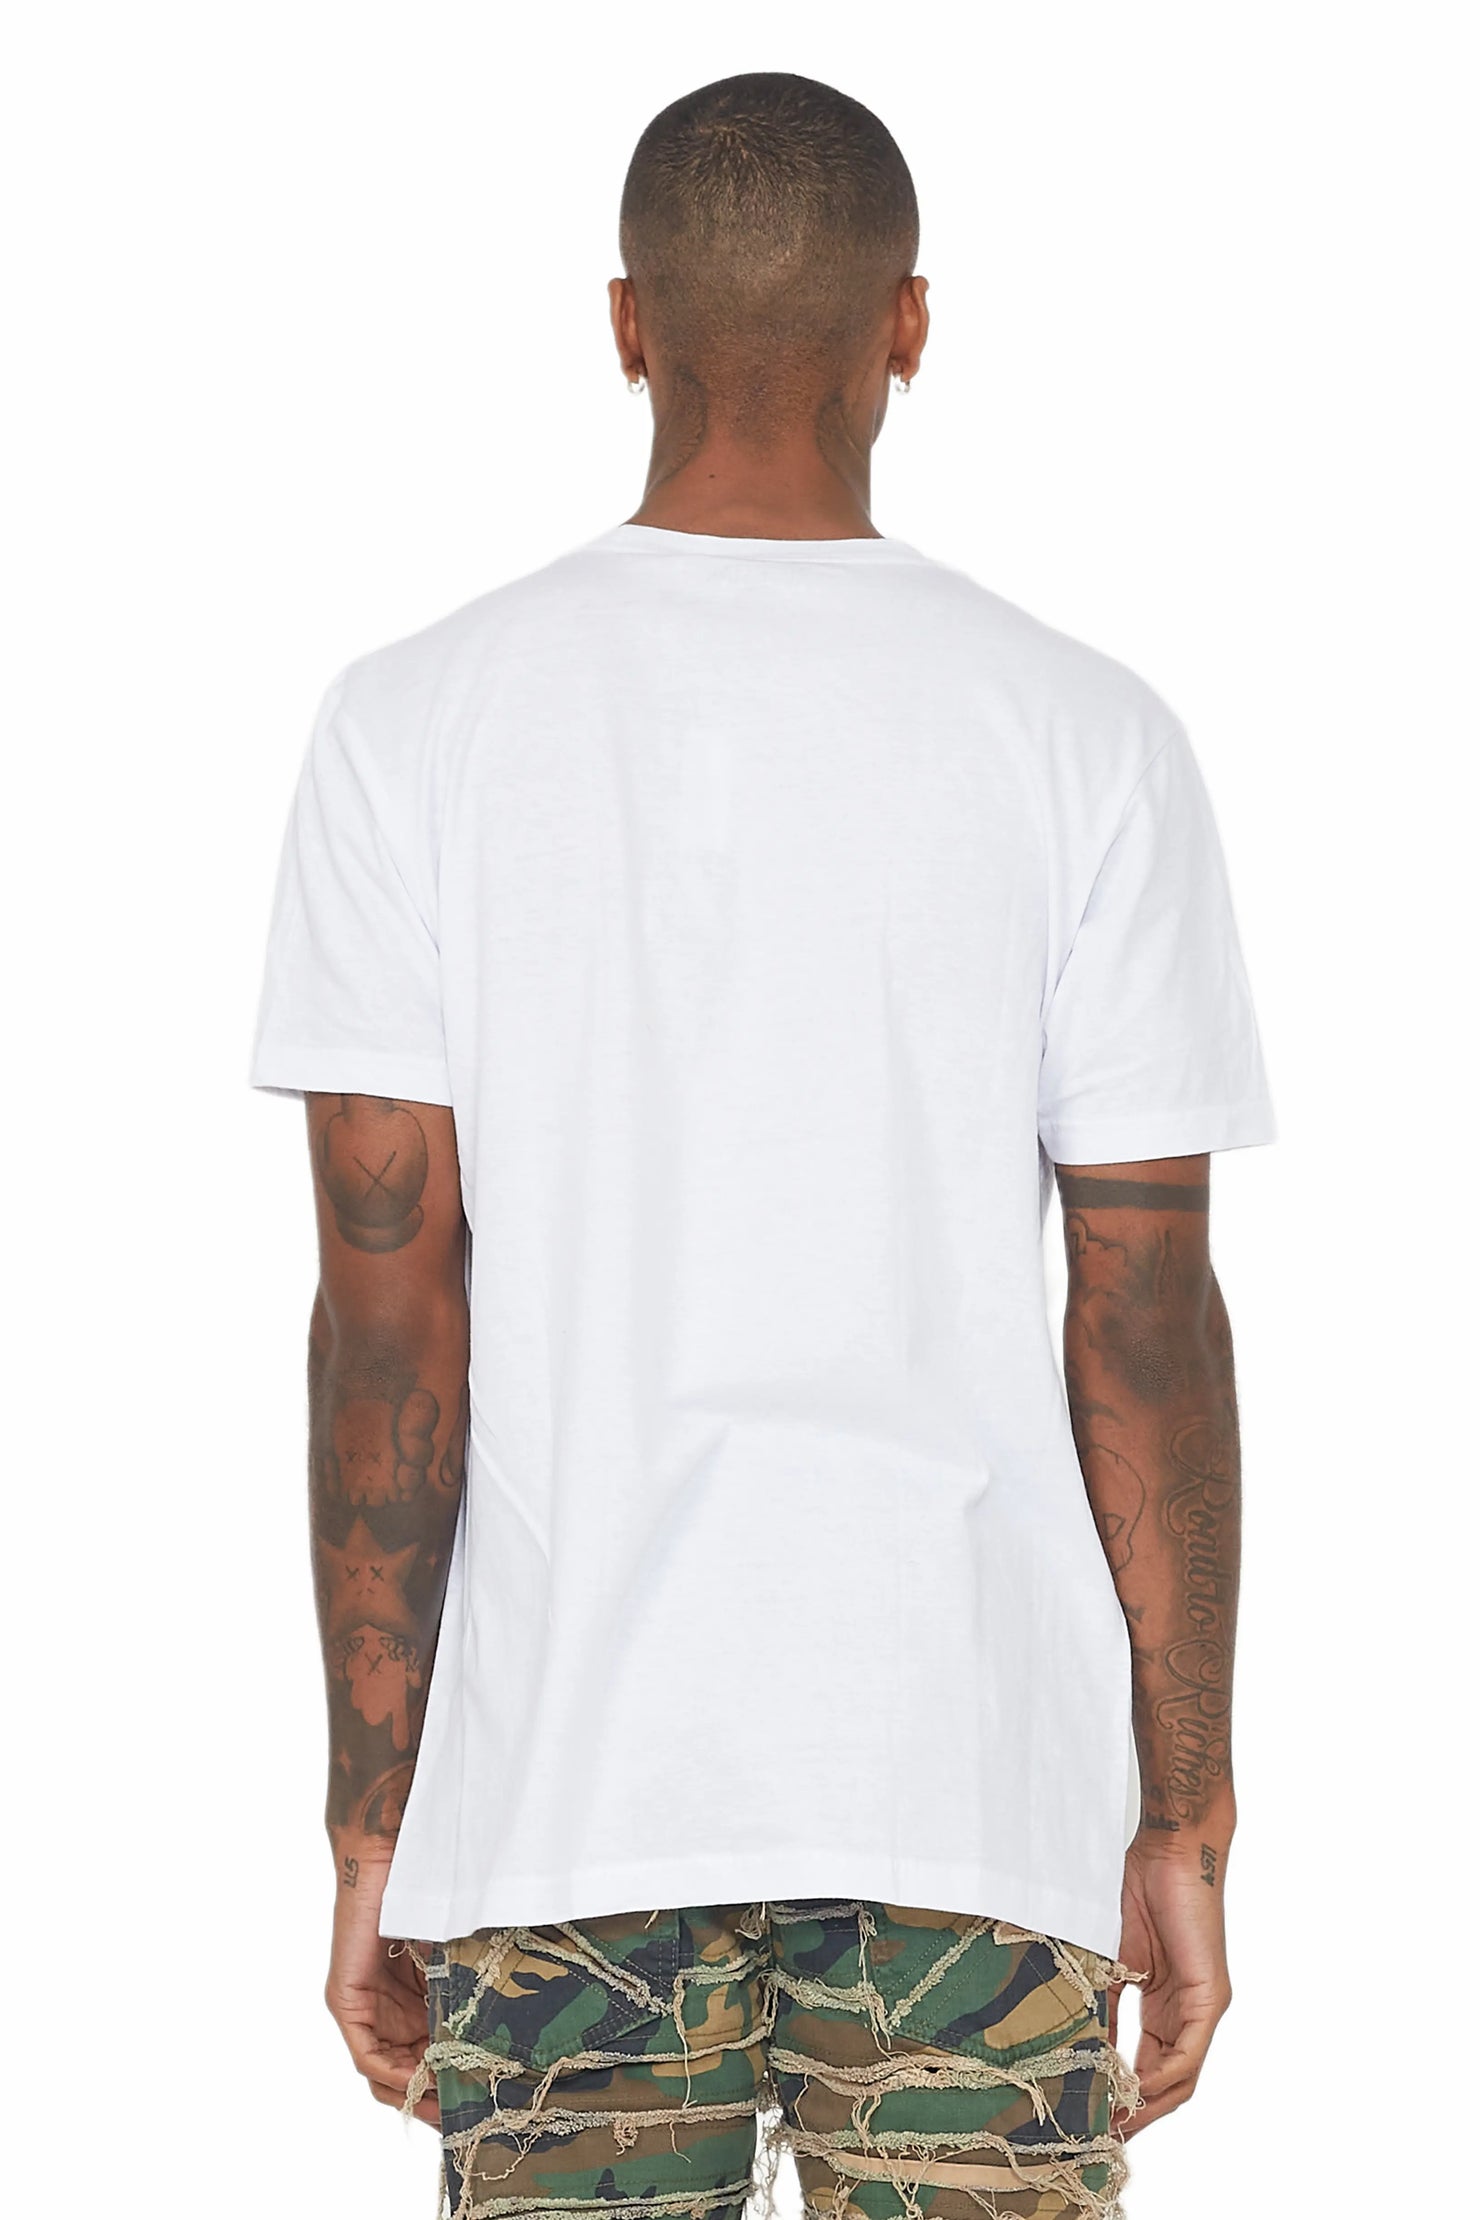 Fraust White/Blue Graphic T-Shirt